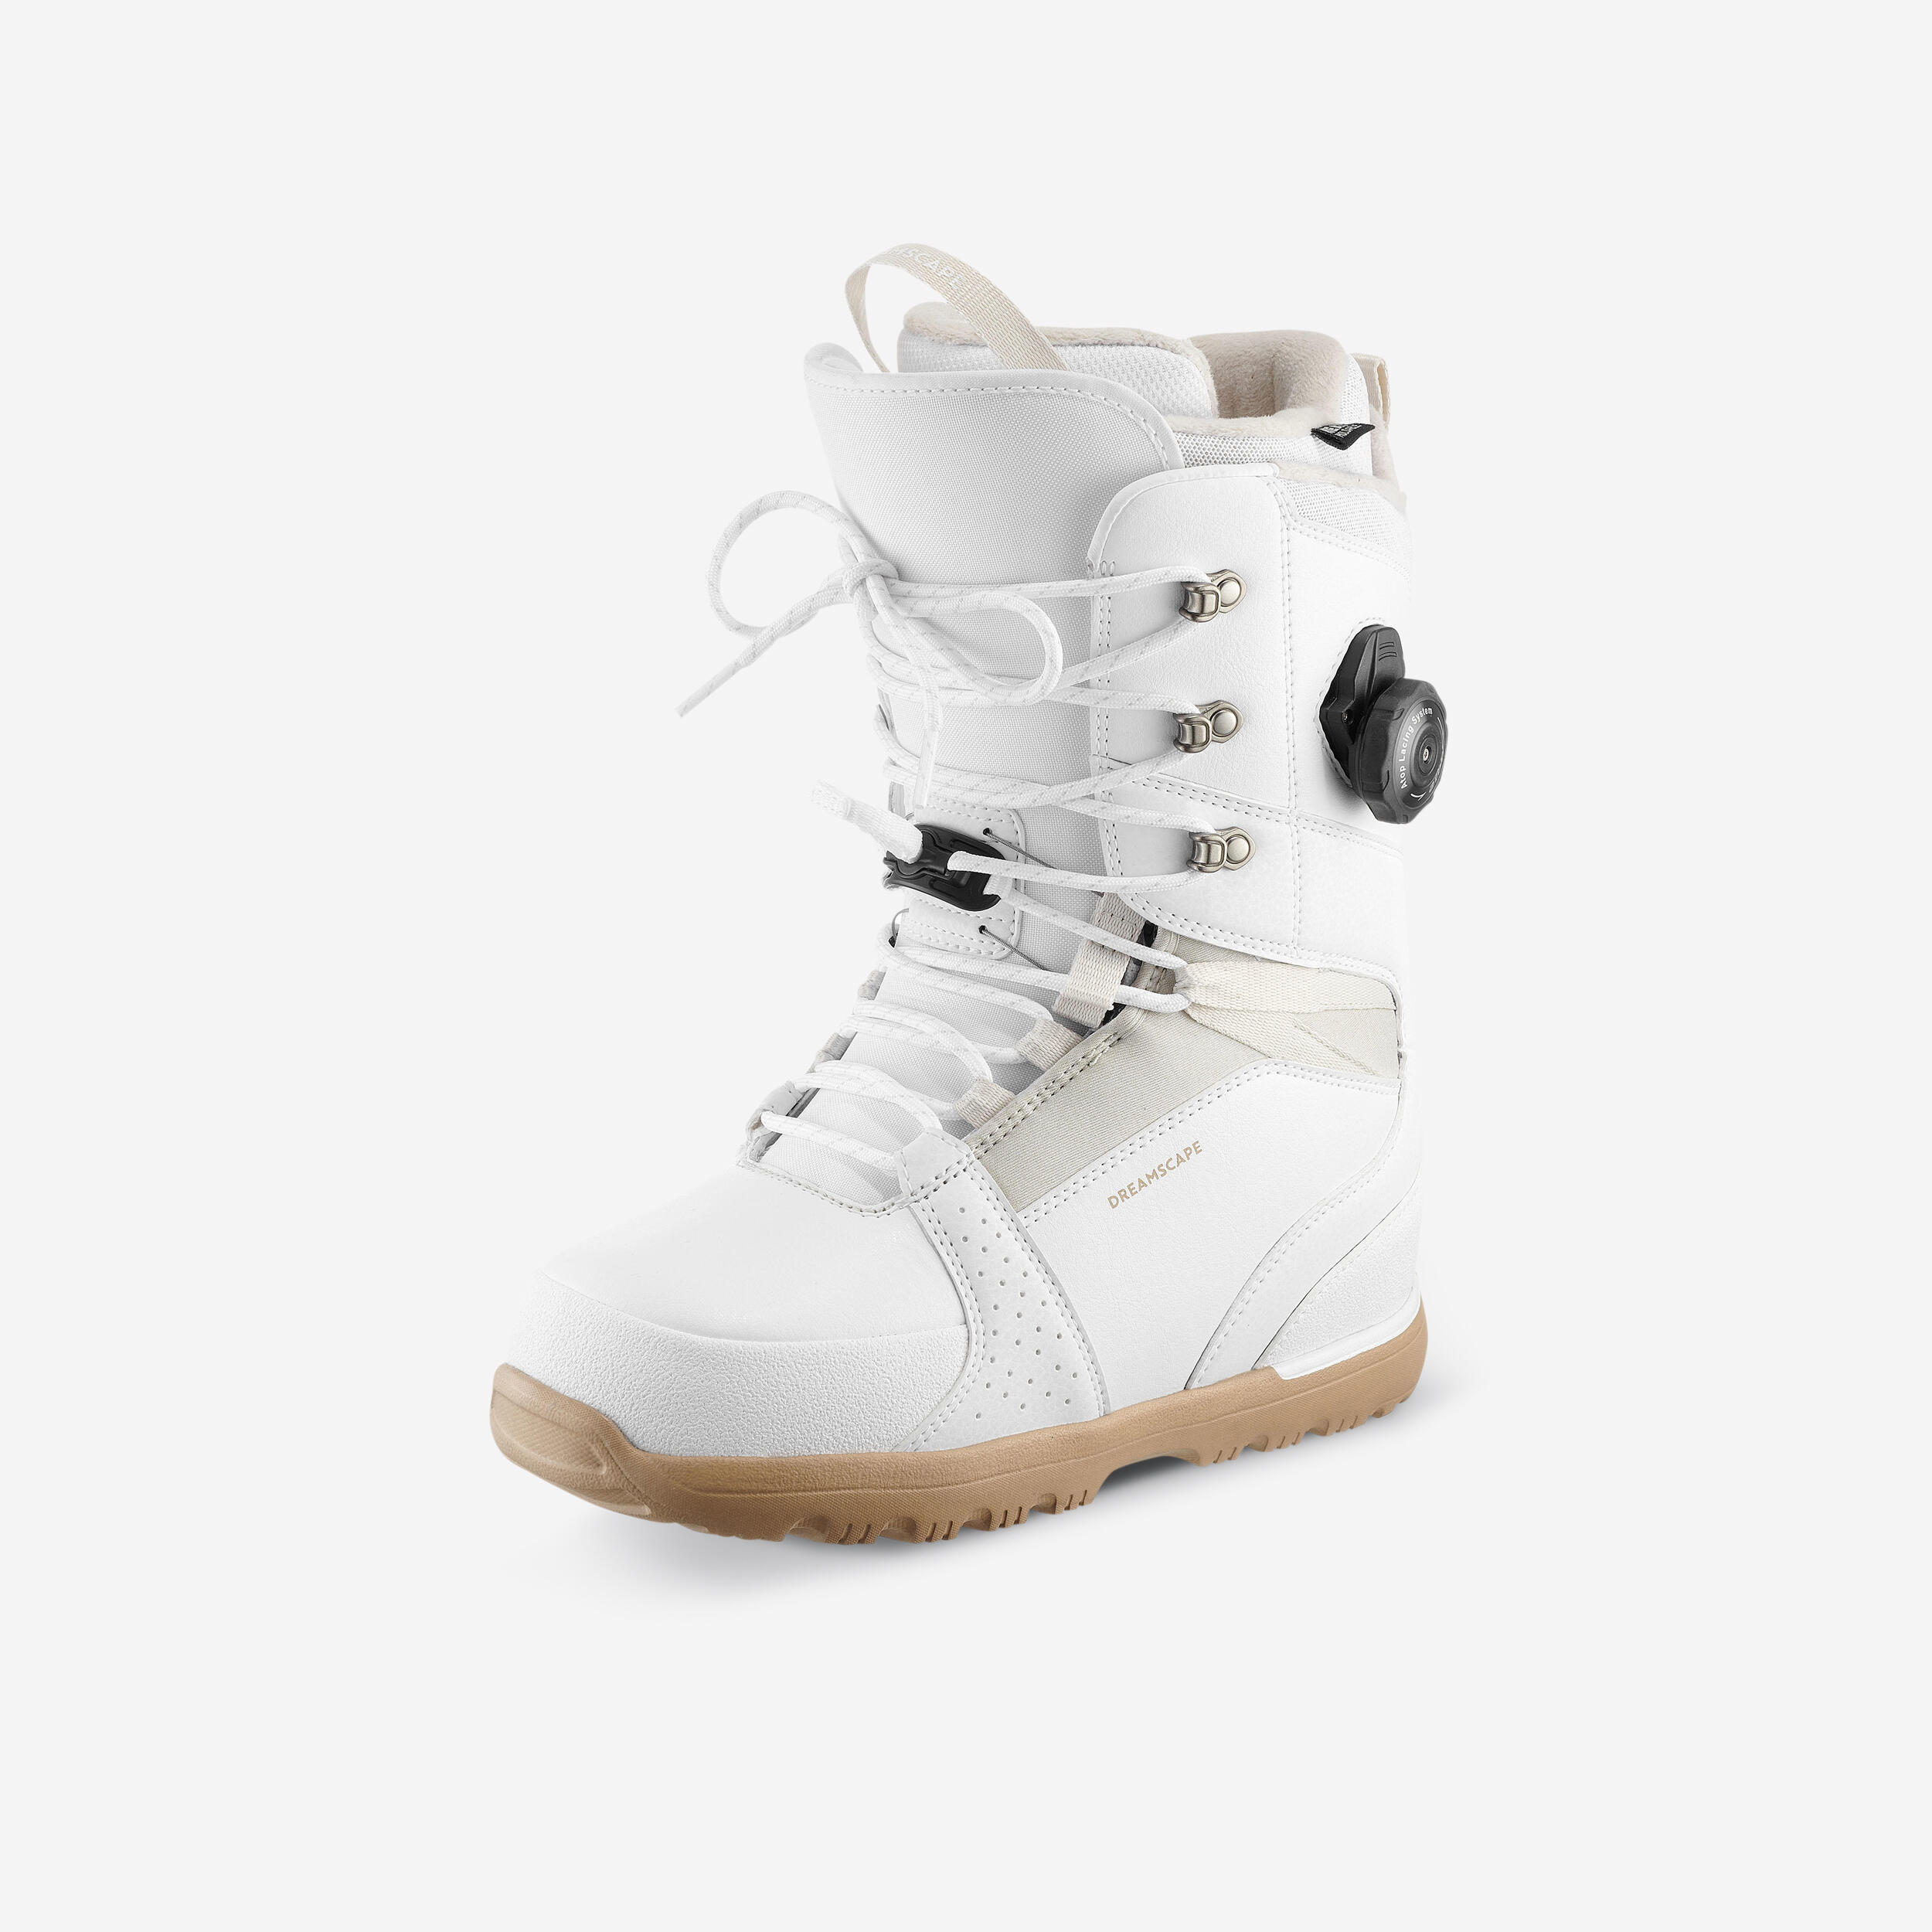 DREAMSCAPE Women's hybrid snowboard boots, medium flex - Endzone white